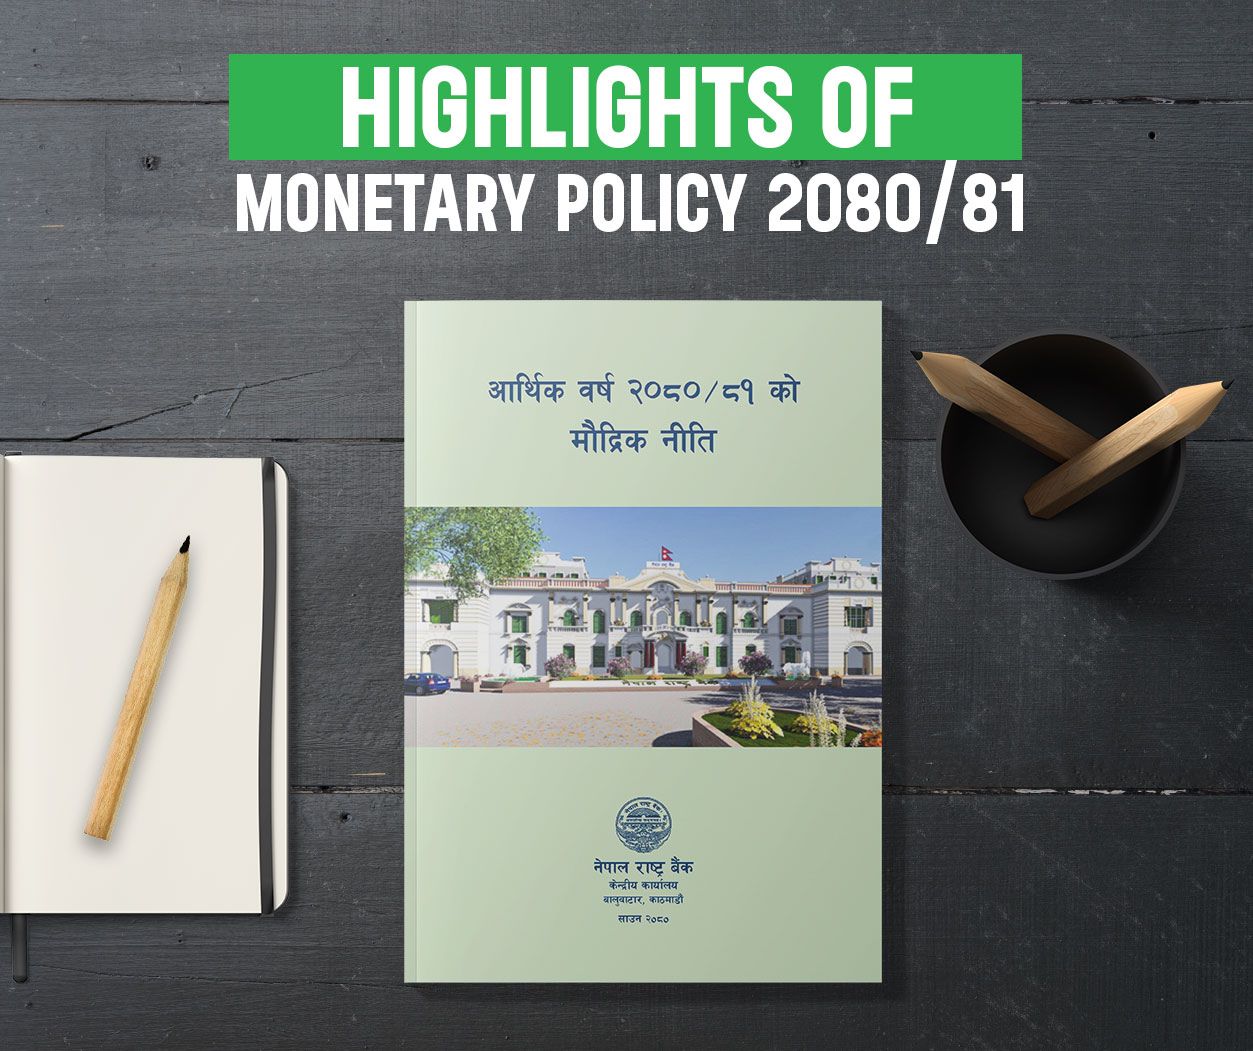 Major Highlights of Monetary Policy 2080/81